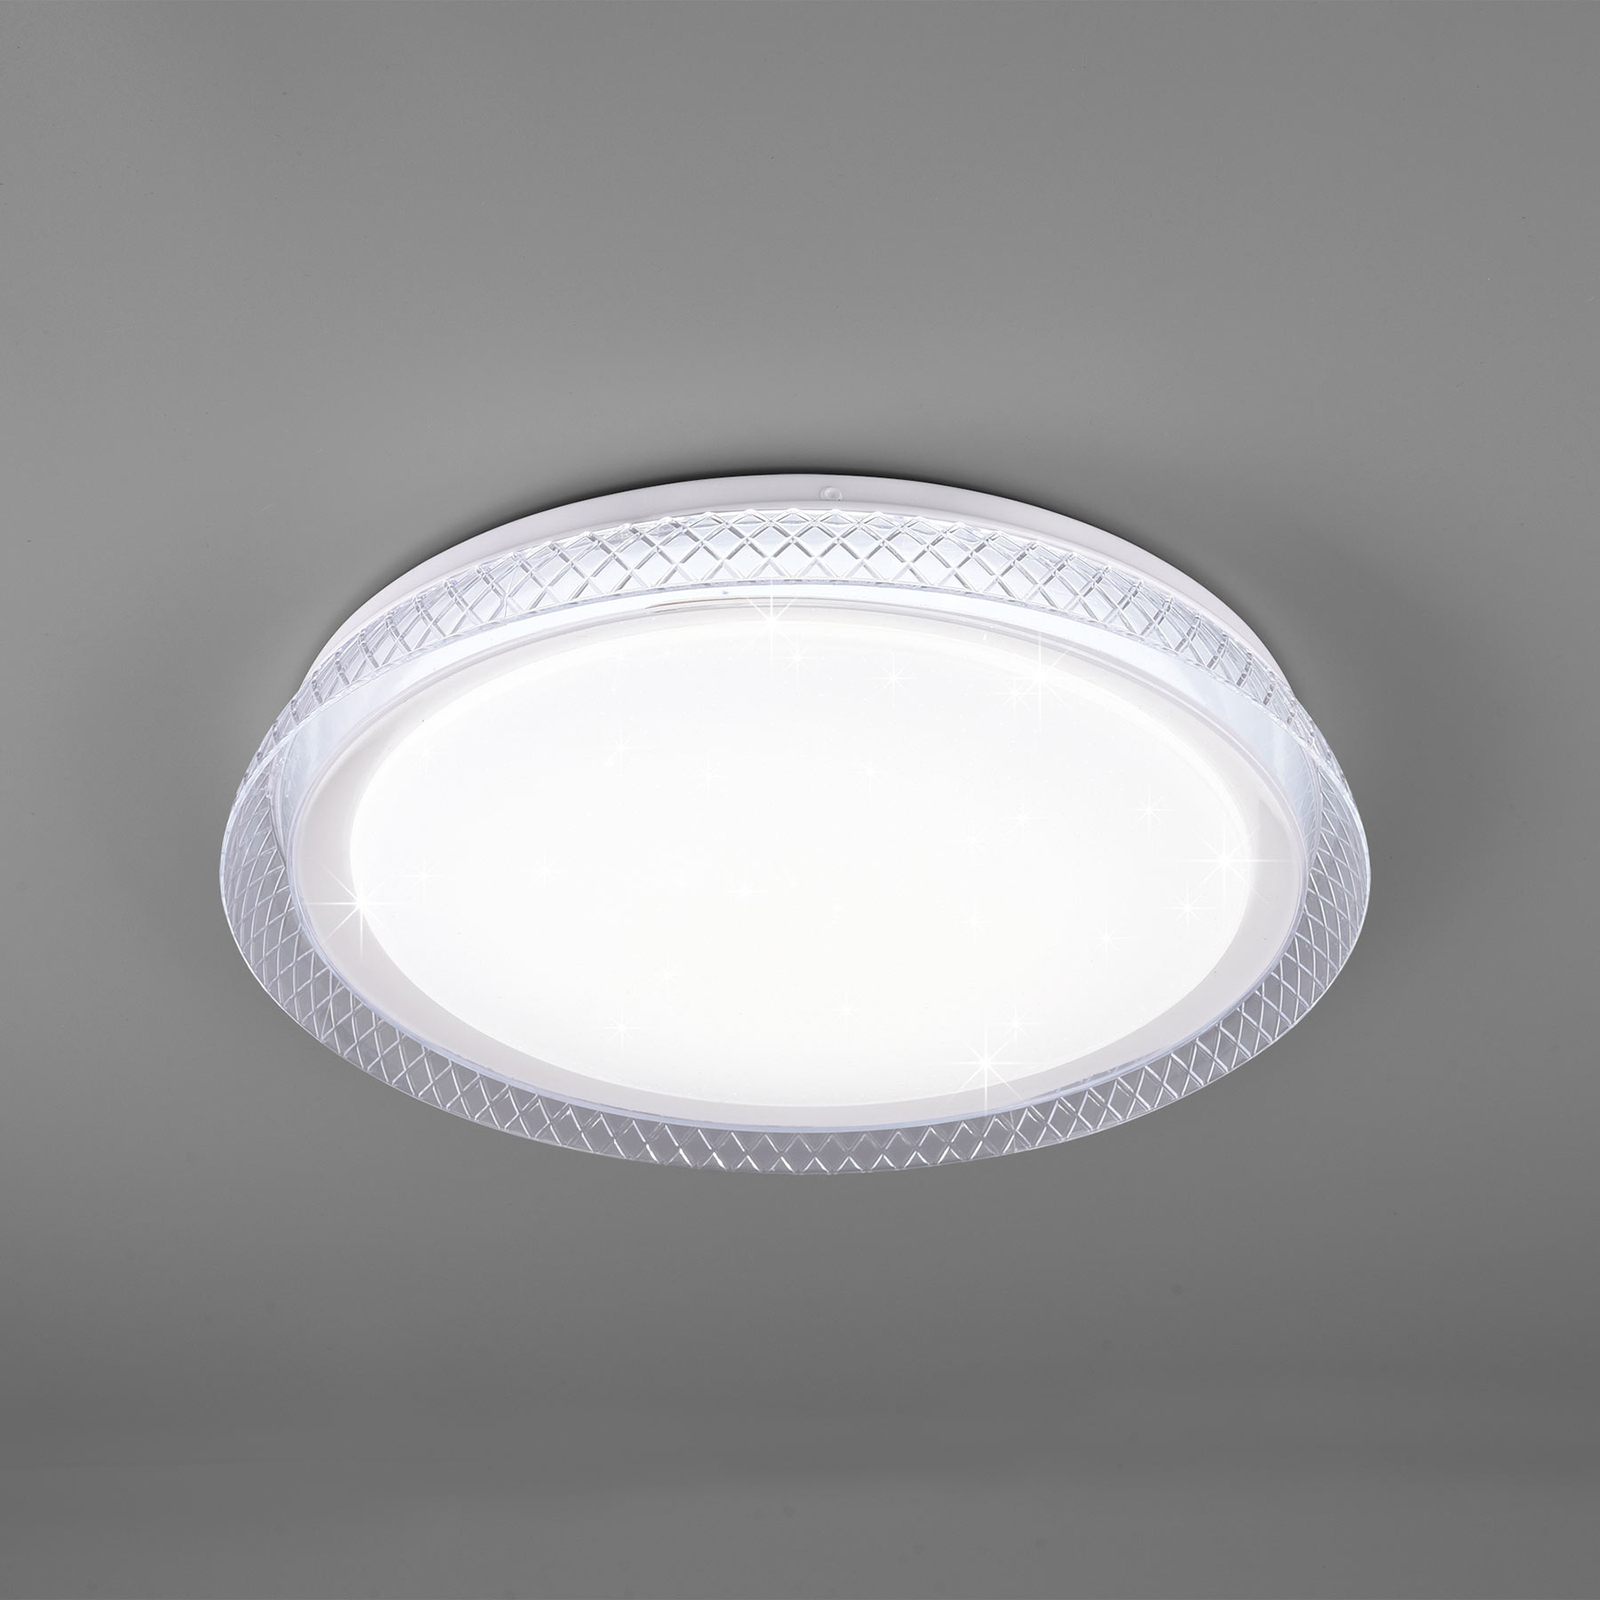 Heracles LED ceiling light, tunable white, Ø 38 cm